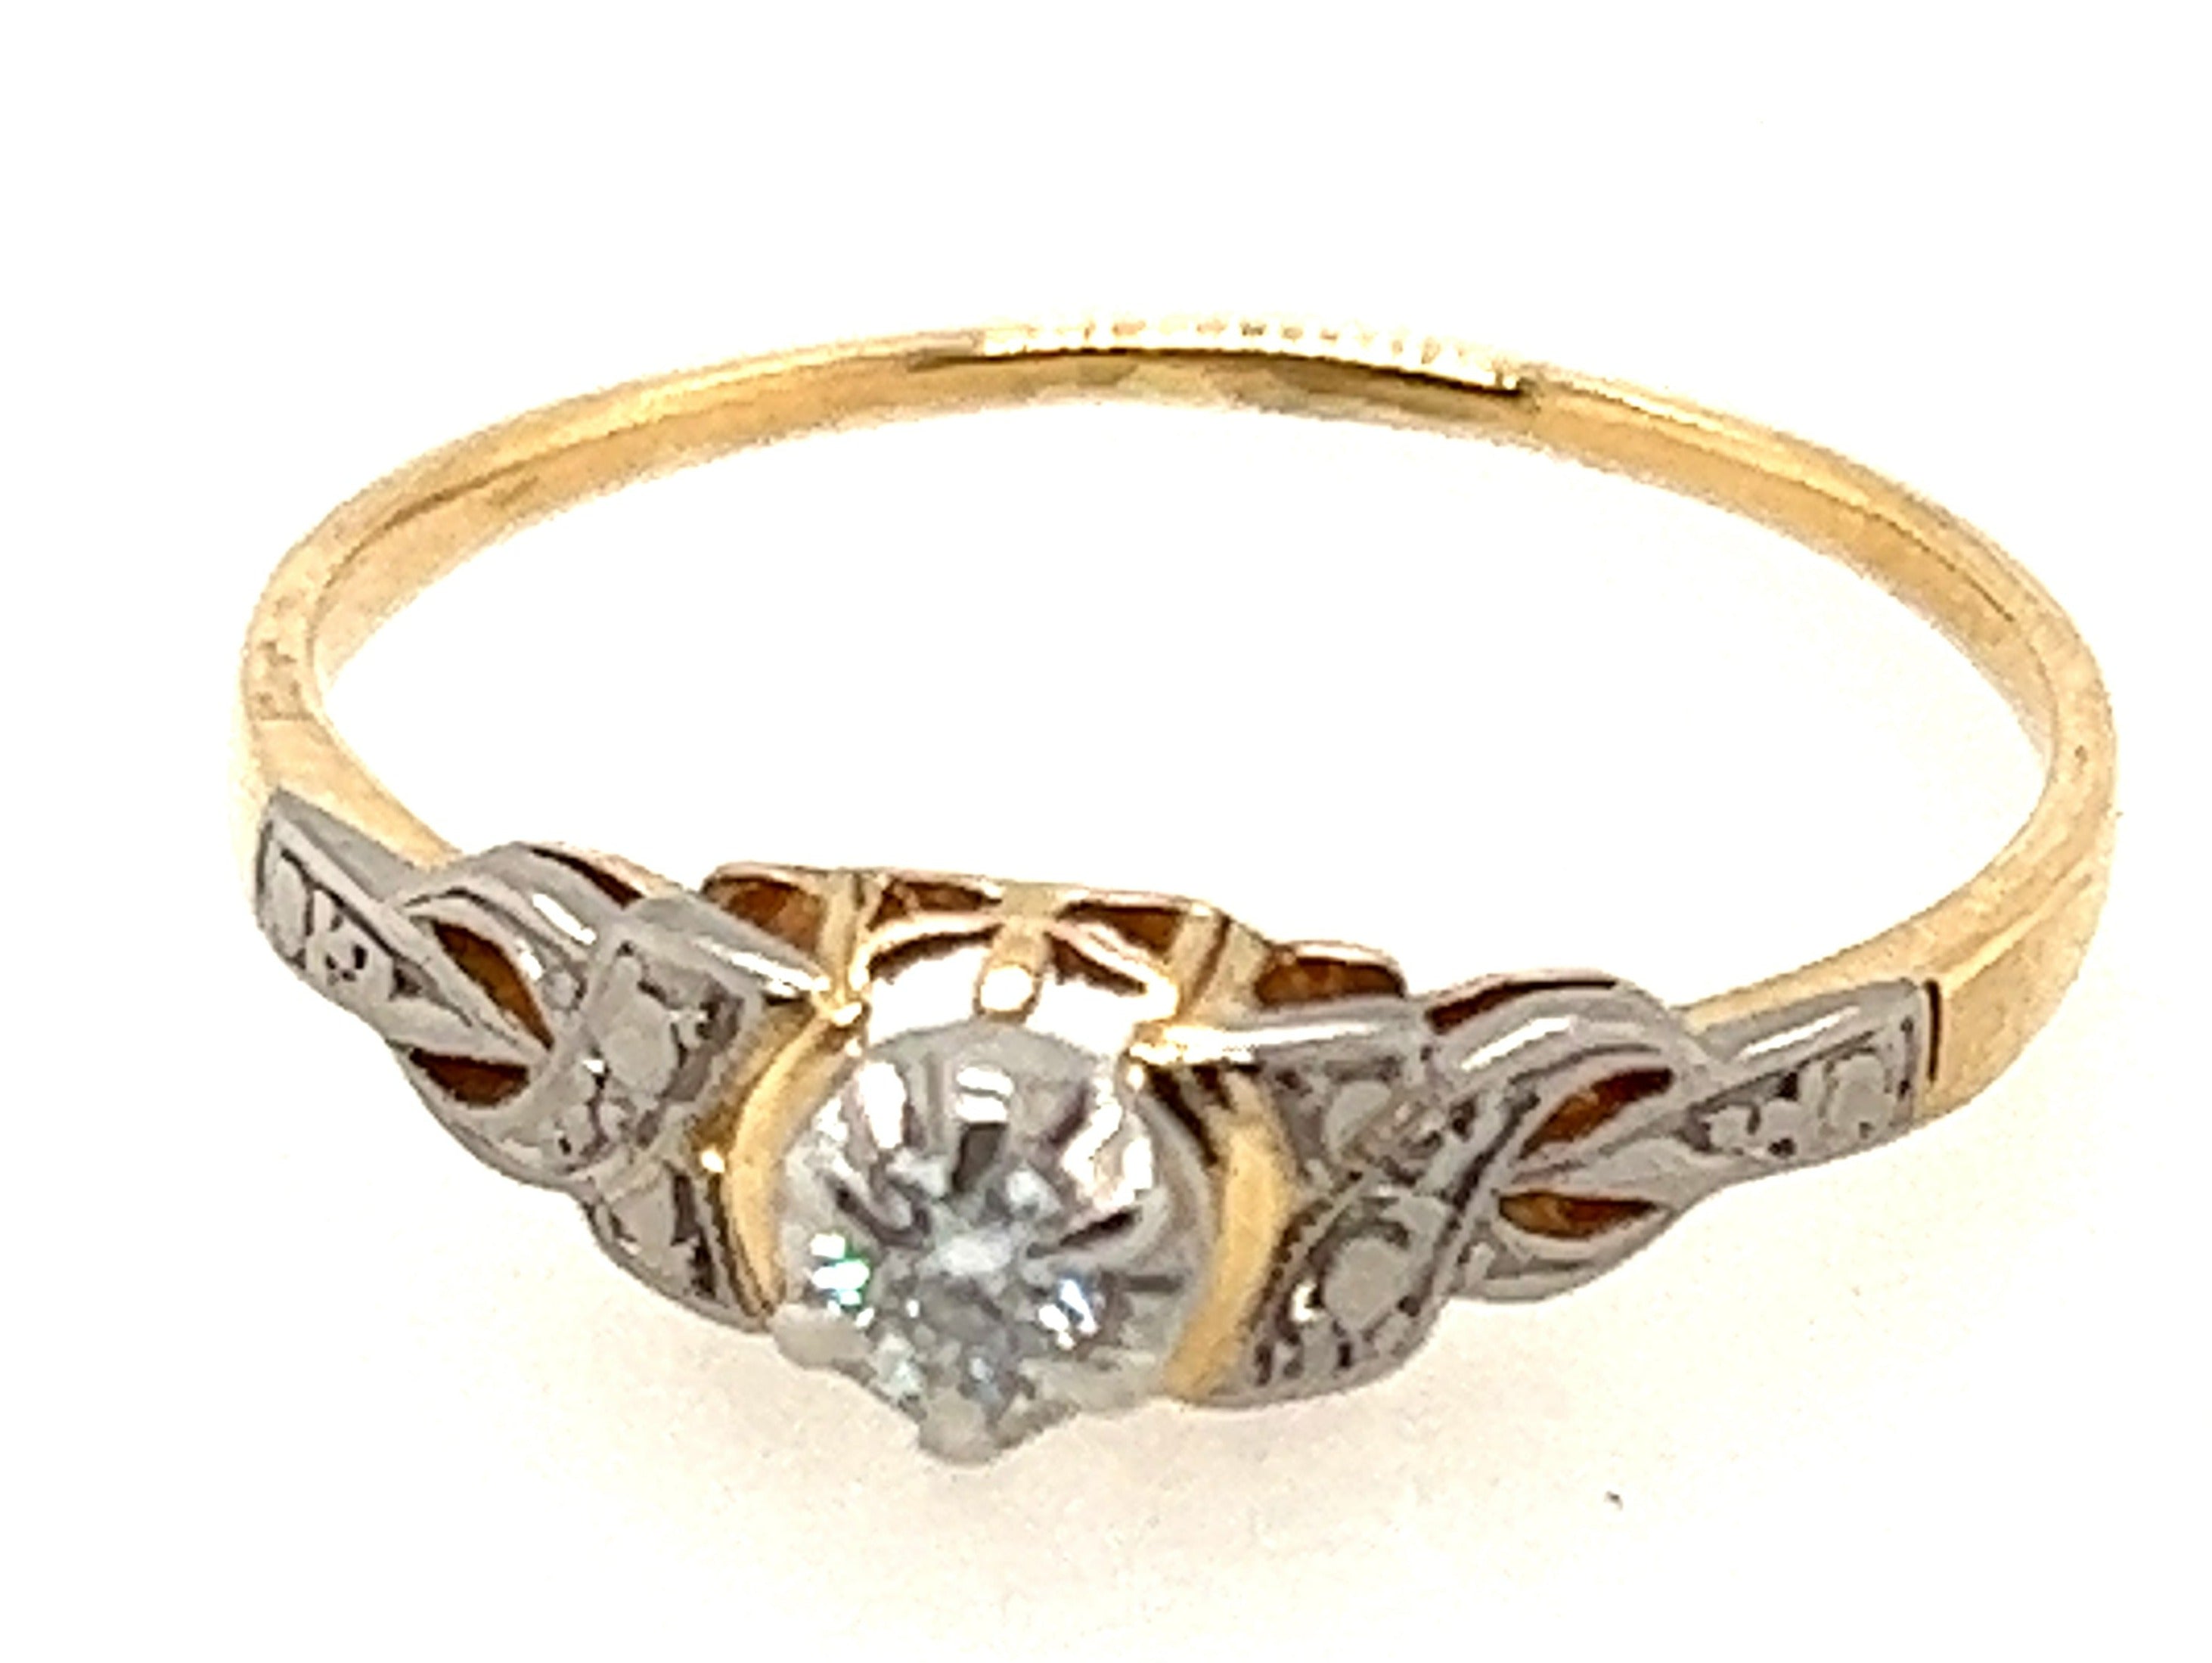 Graceful 18ct Yellow & White Gold Diamond Ring